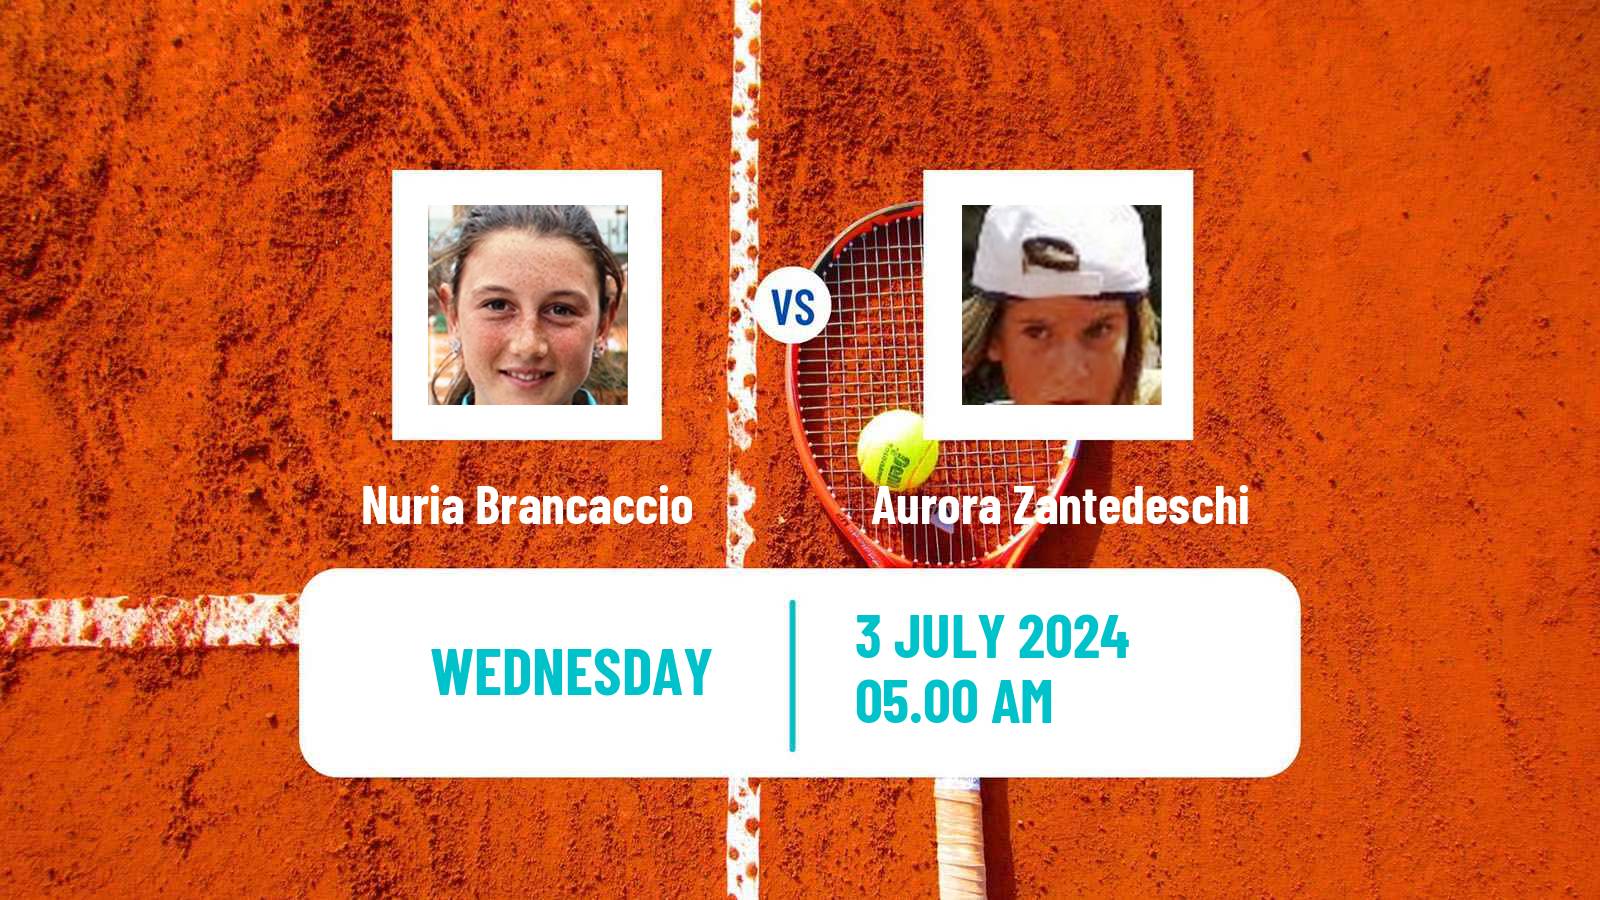 Tennis ITF W35 Rome Women Nuria Brancaccio - Aurora Zantedeschi